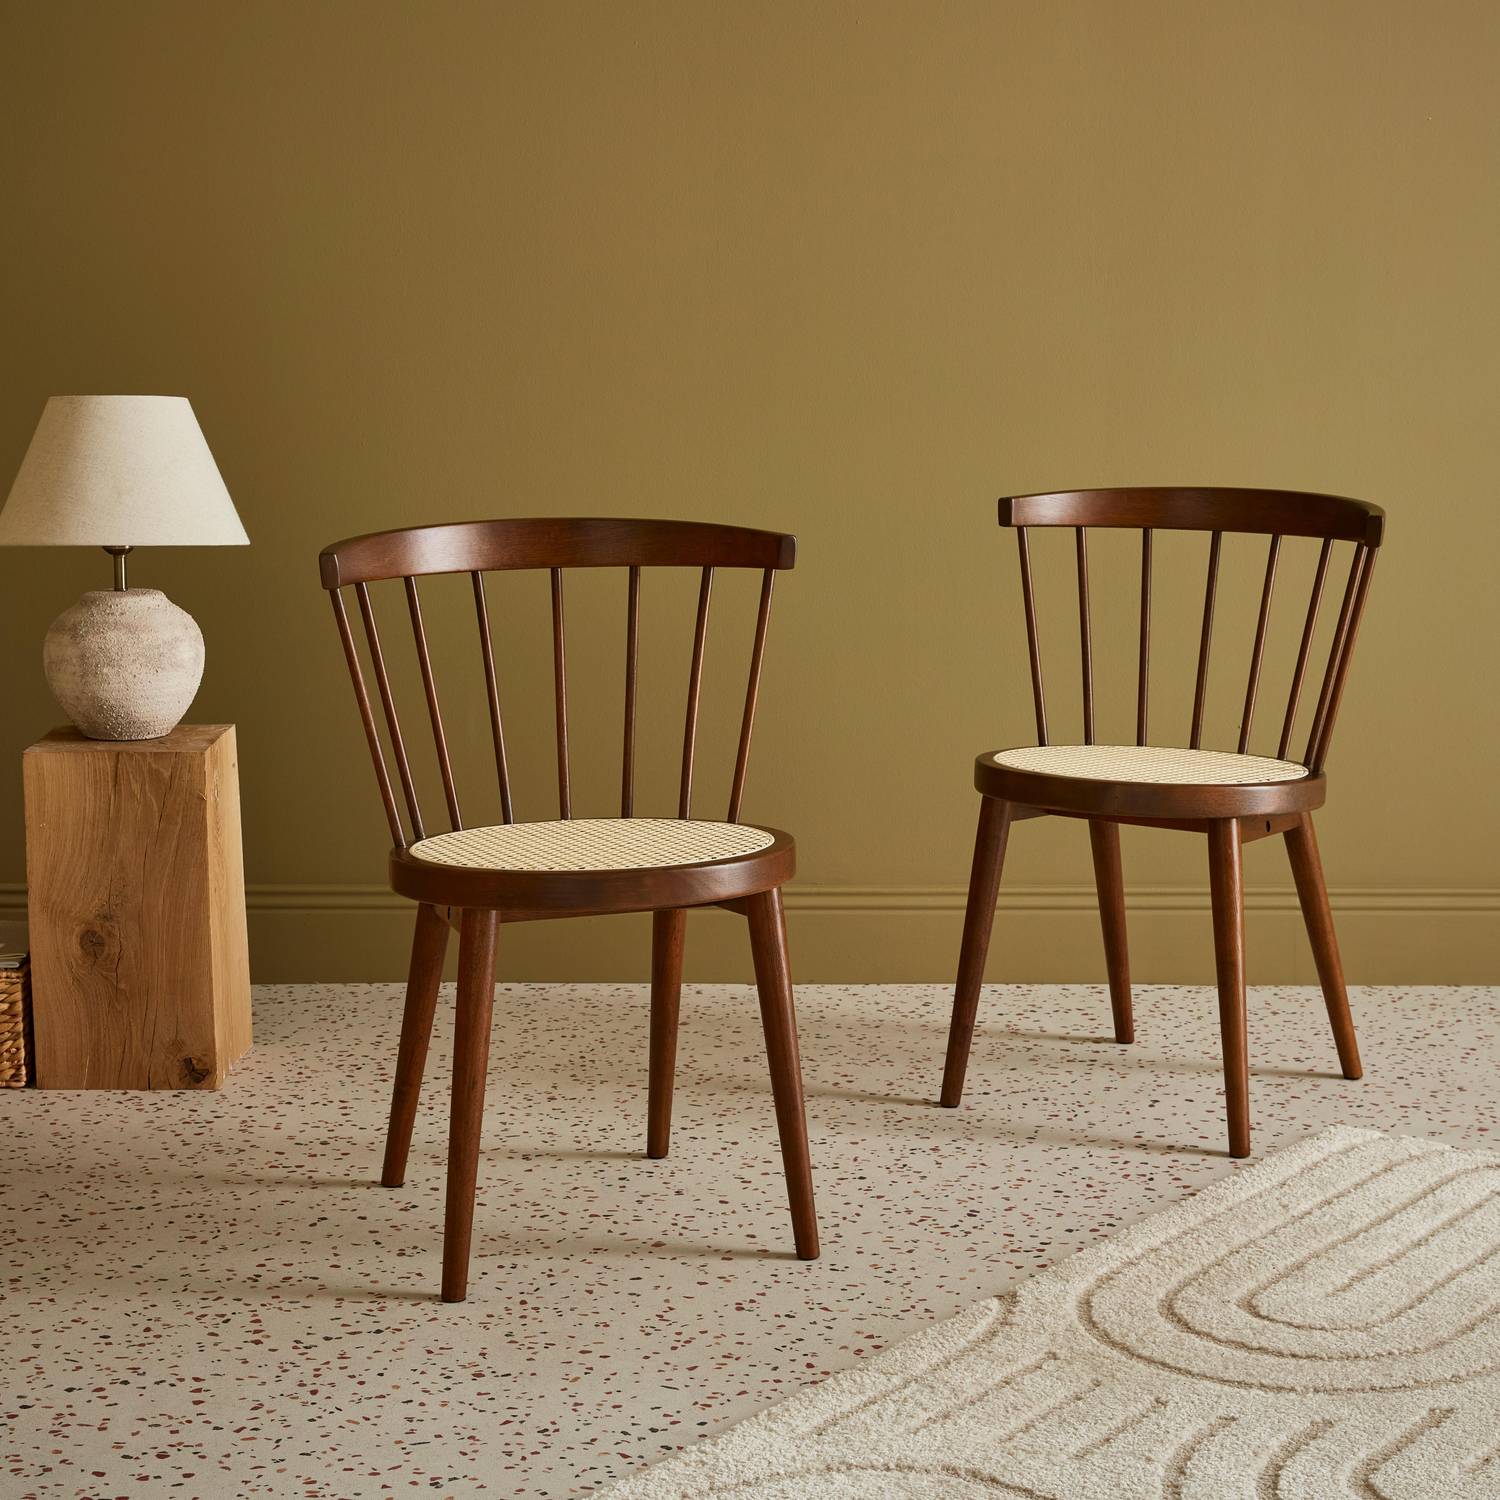 Pair of  Wood and Cane Chairs, Bohemian Spirit, Dark wood, L53 x W53.5 x H 6 cm Photo2